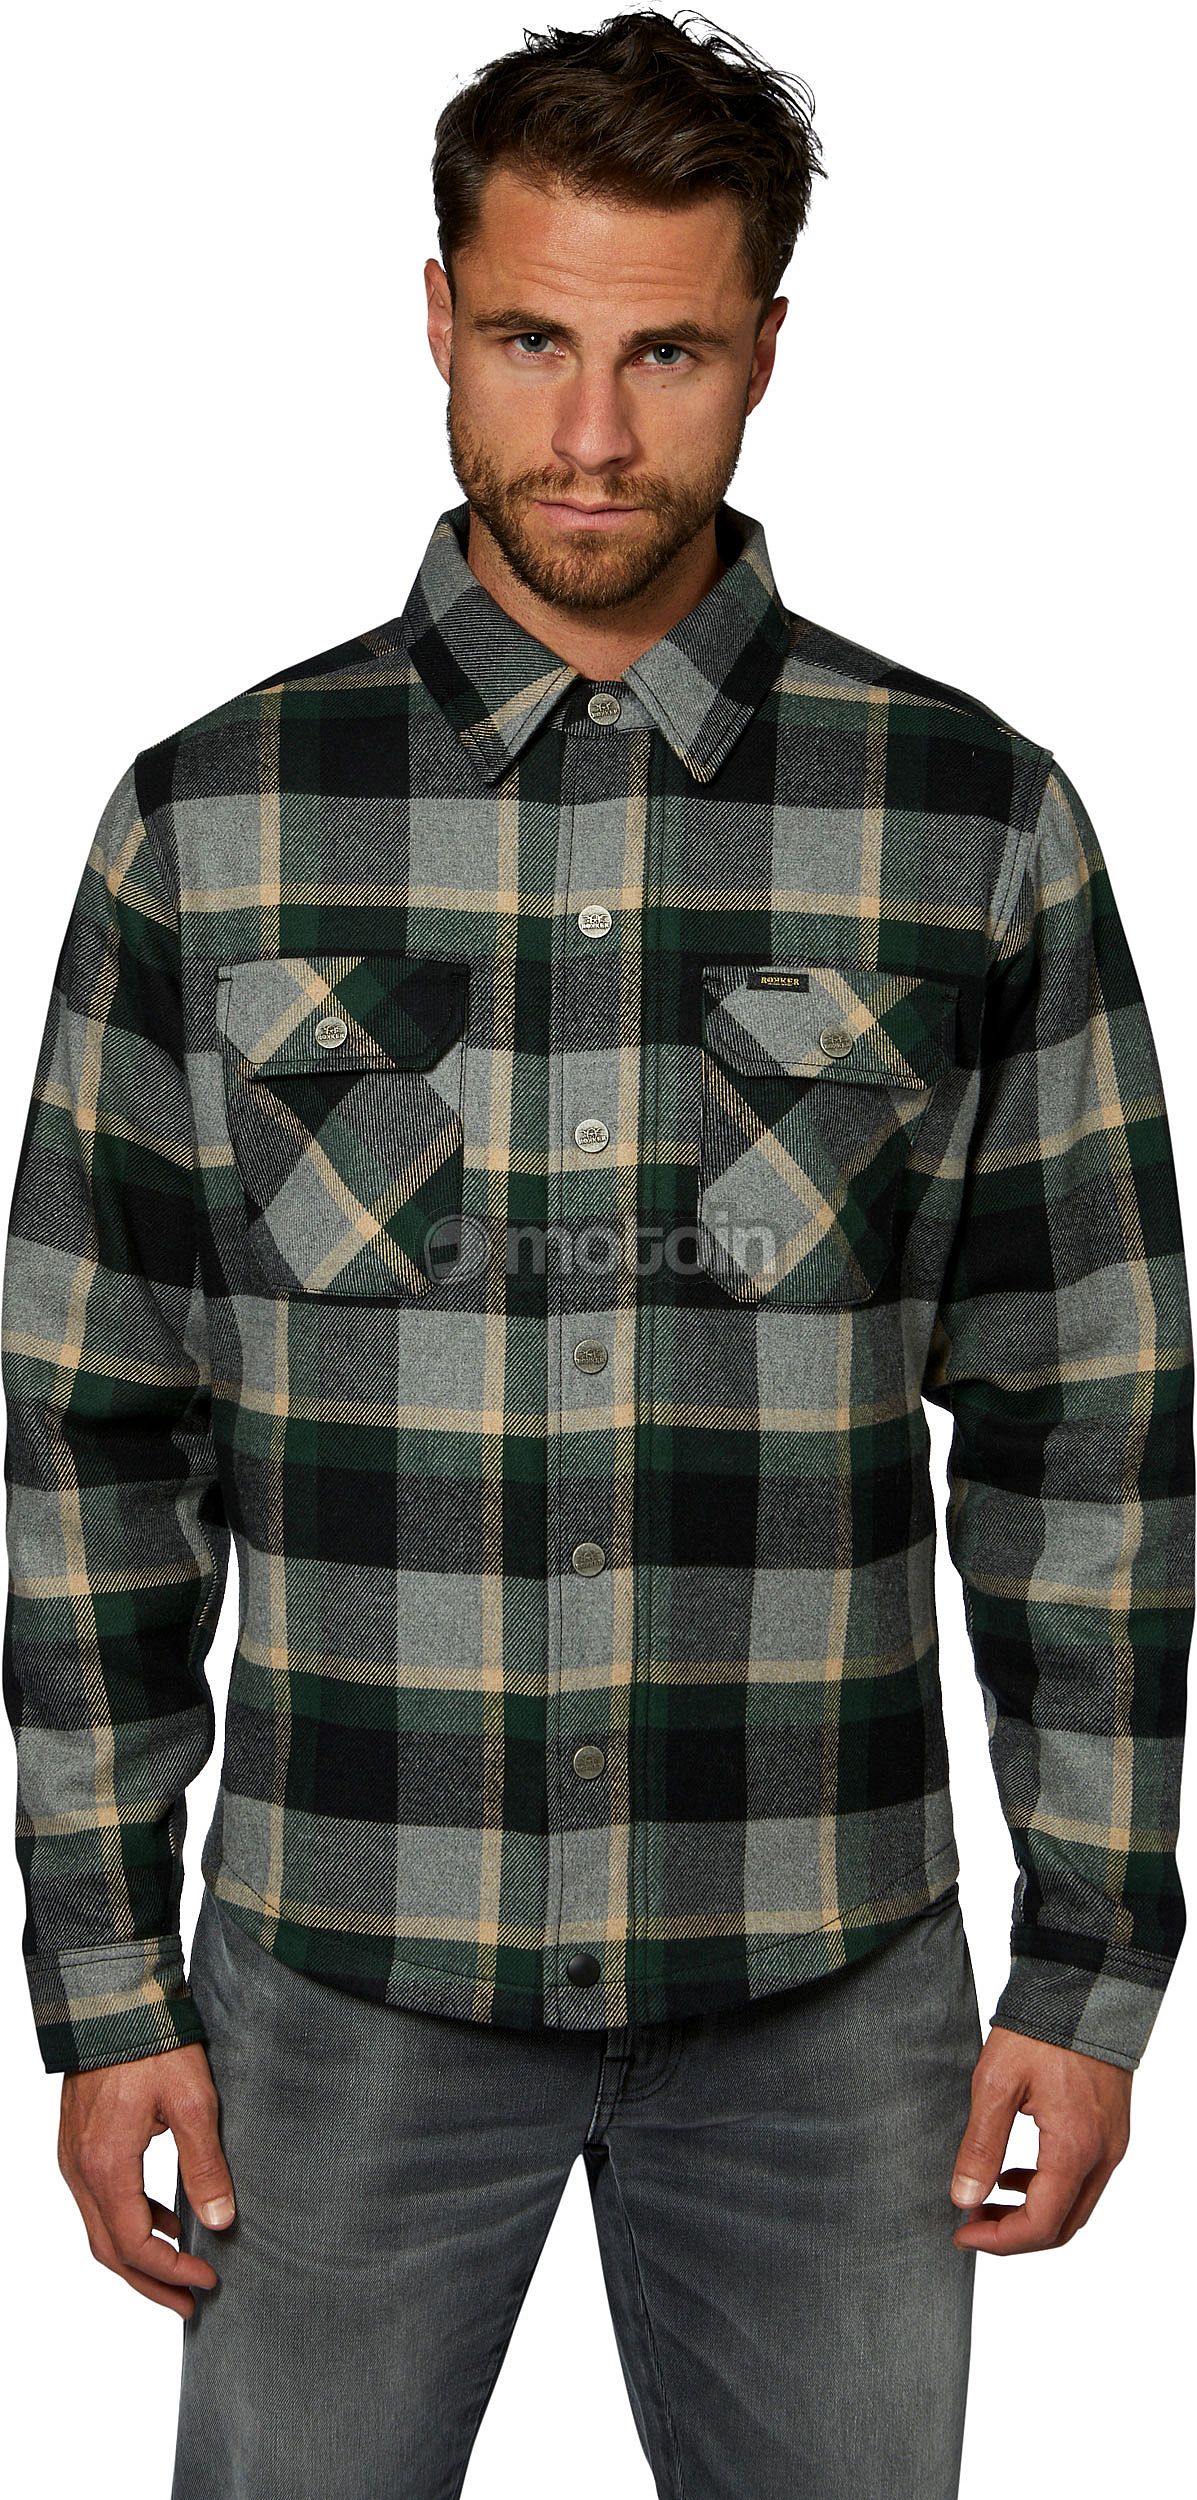 Rokker Memphis Green, camisa/camisa de téxtil